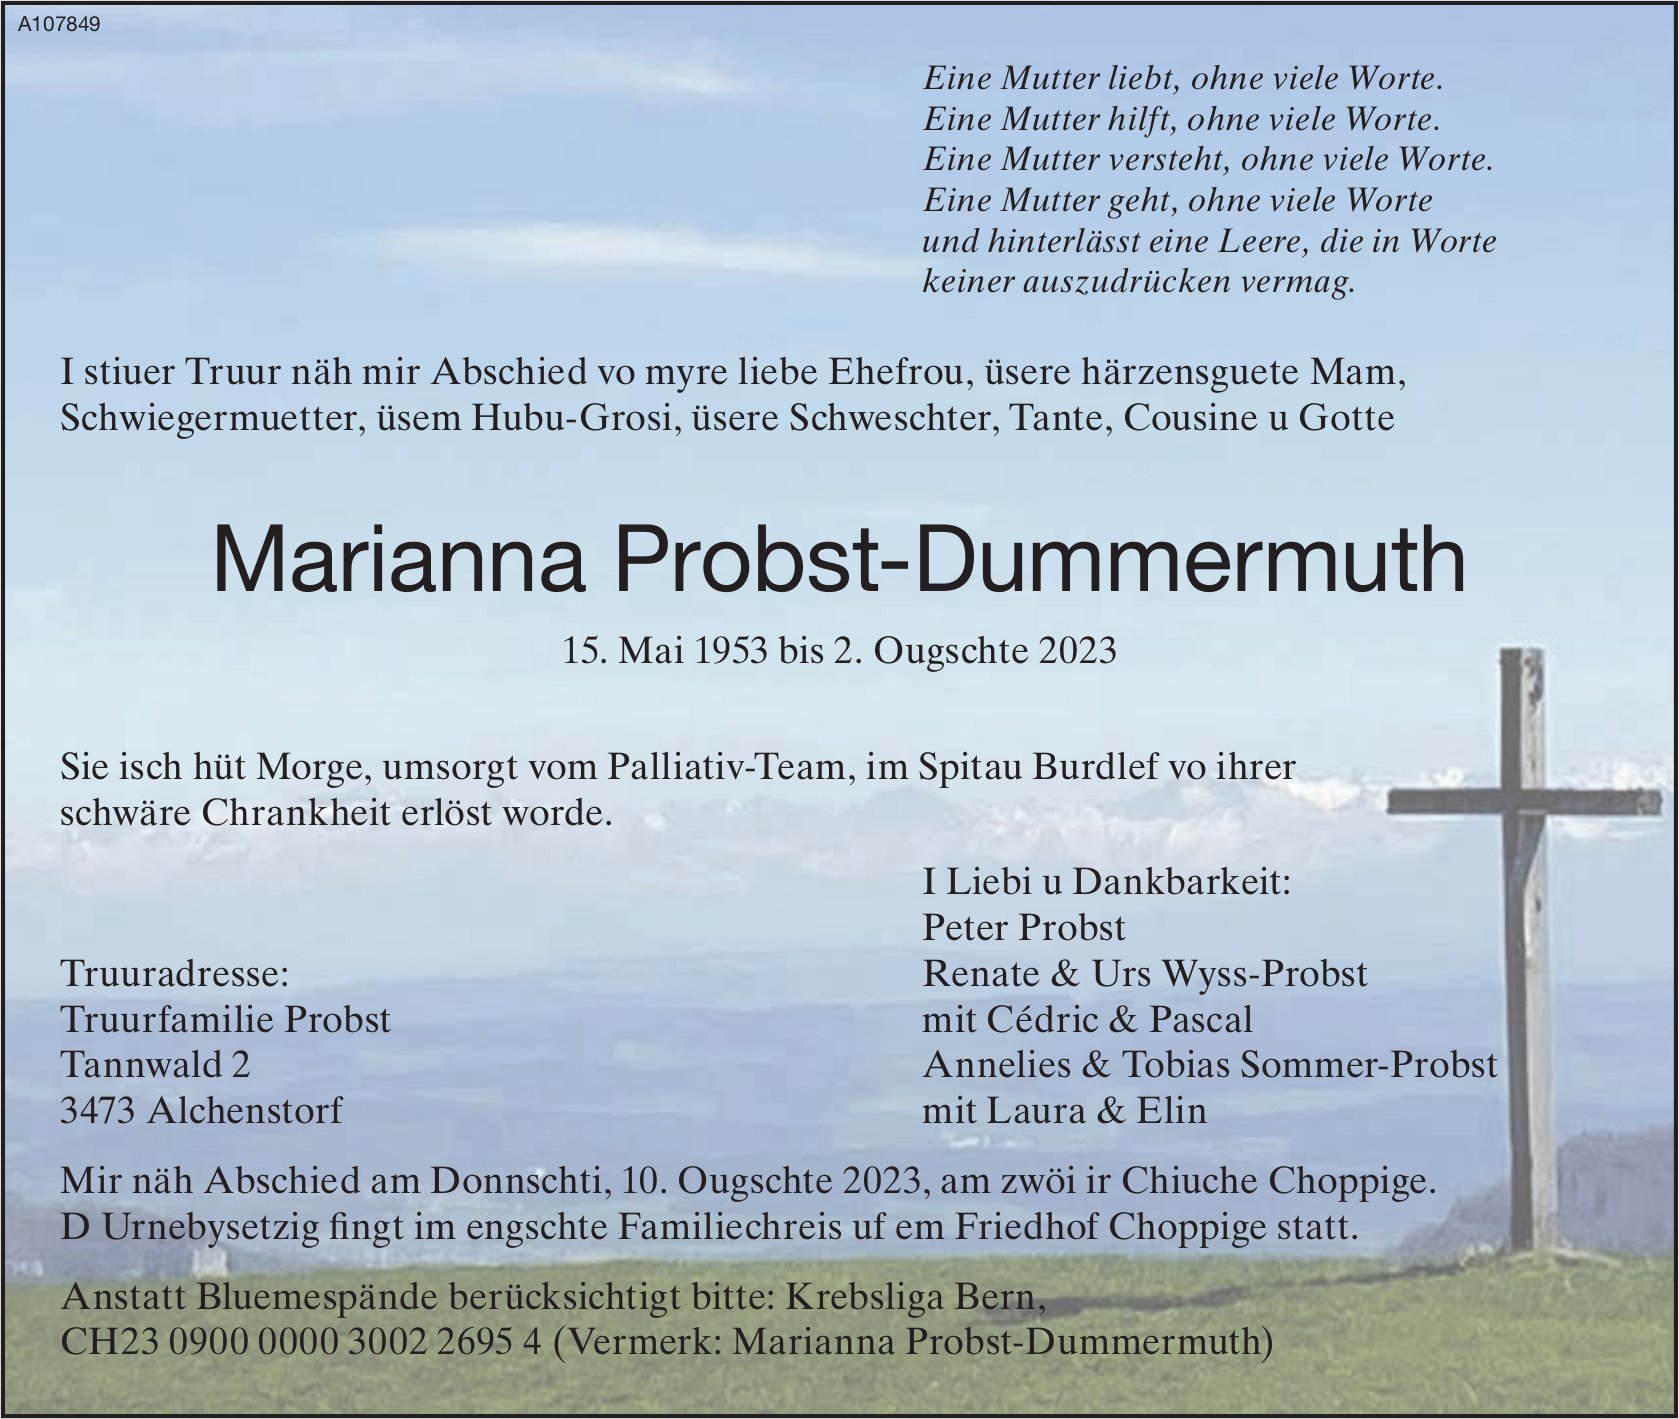 Marianna Probst-Dummermuth, August 2023 / TA